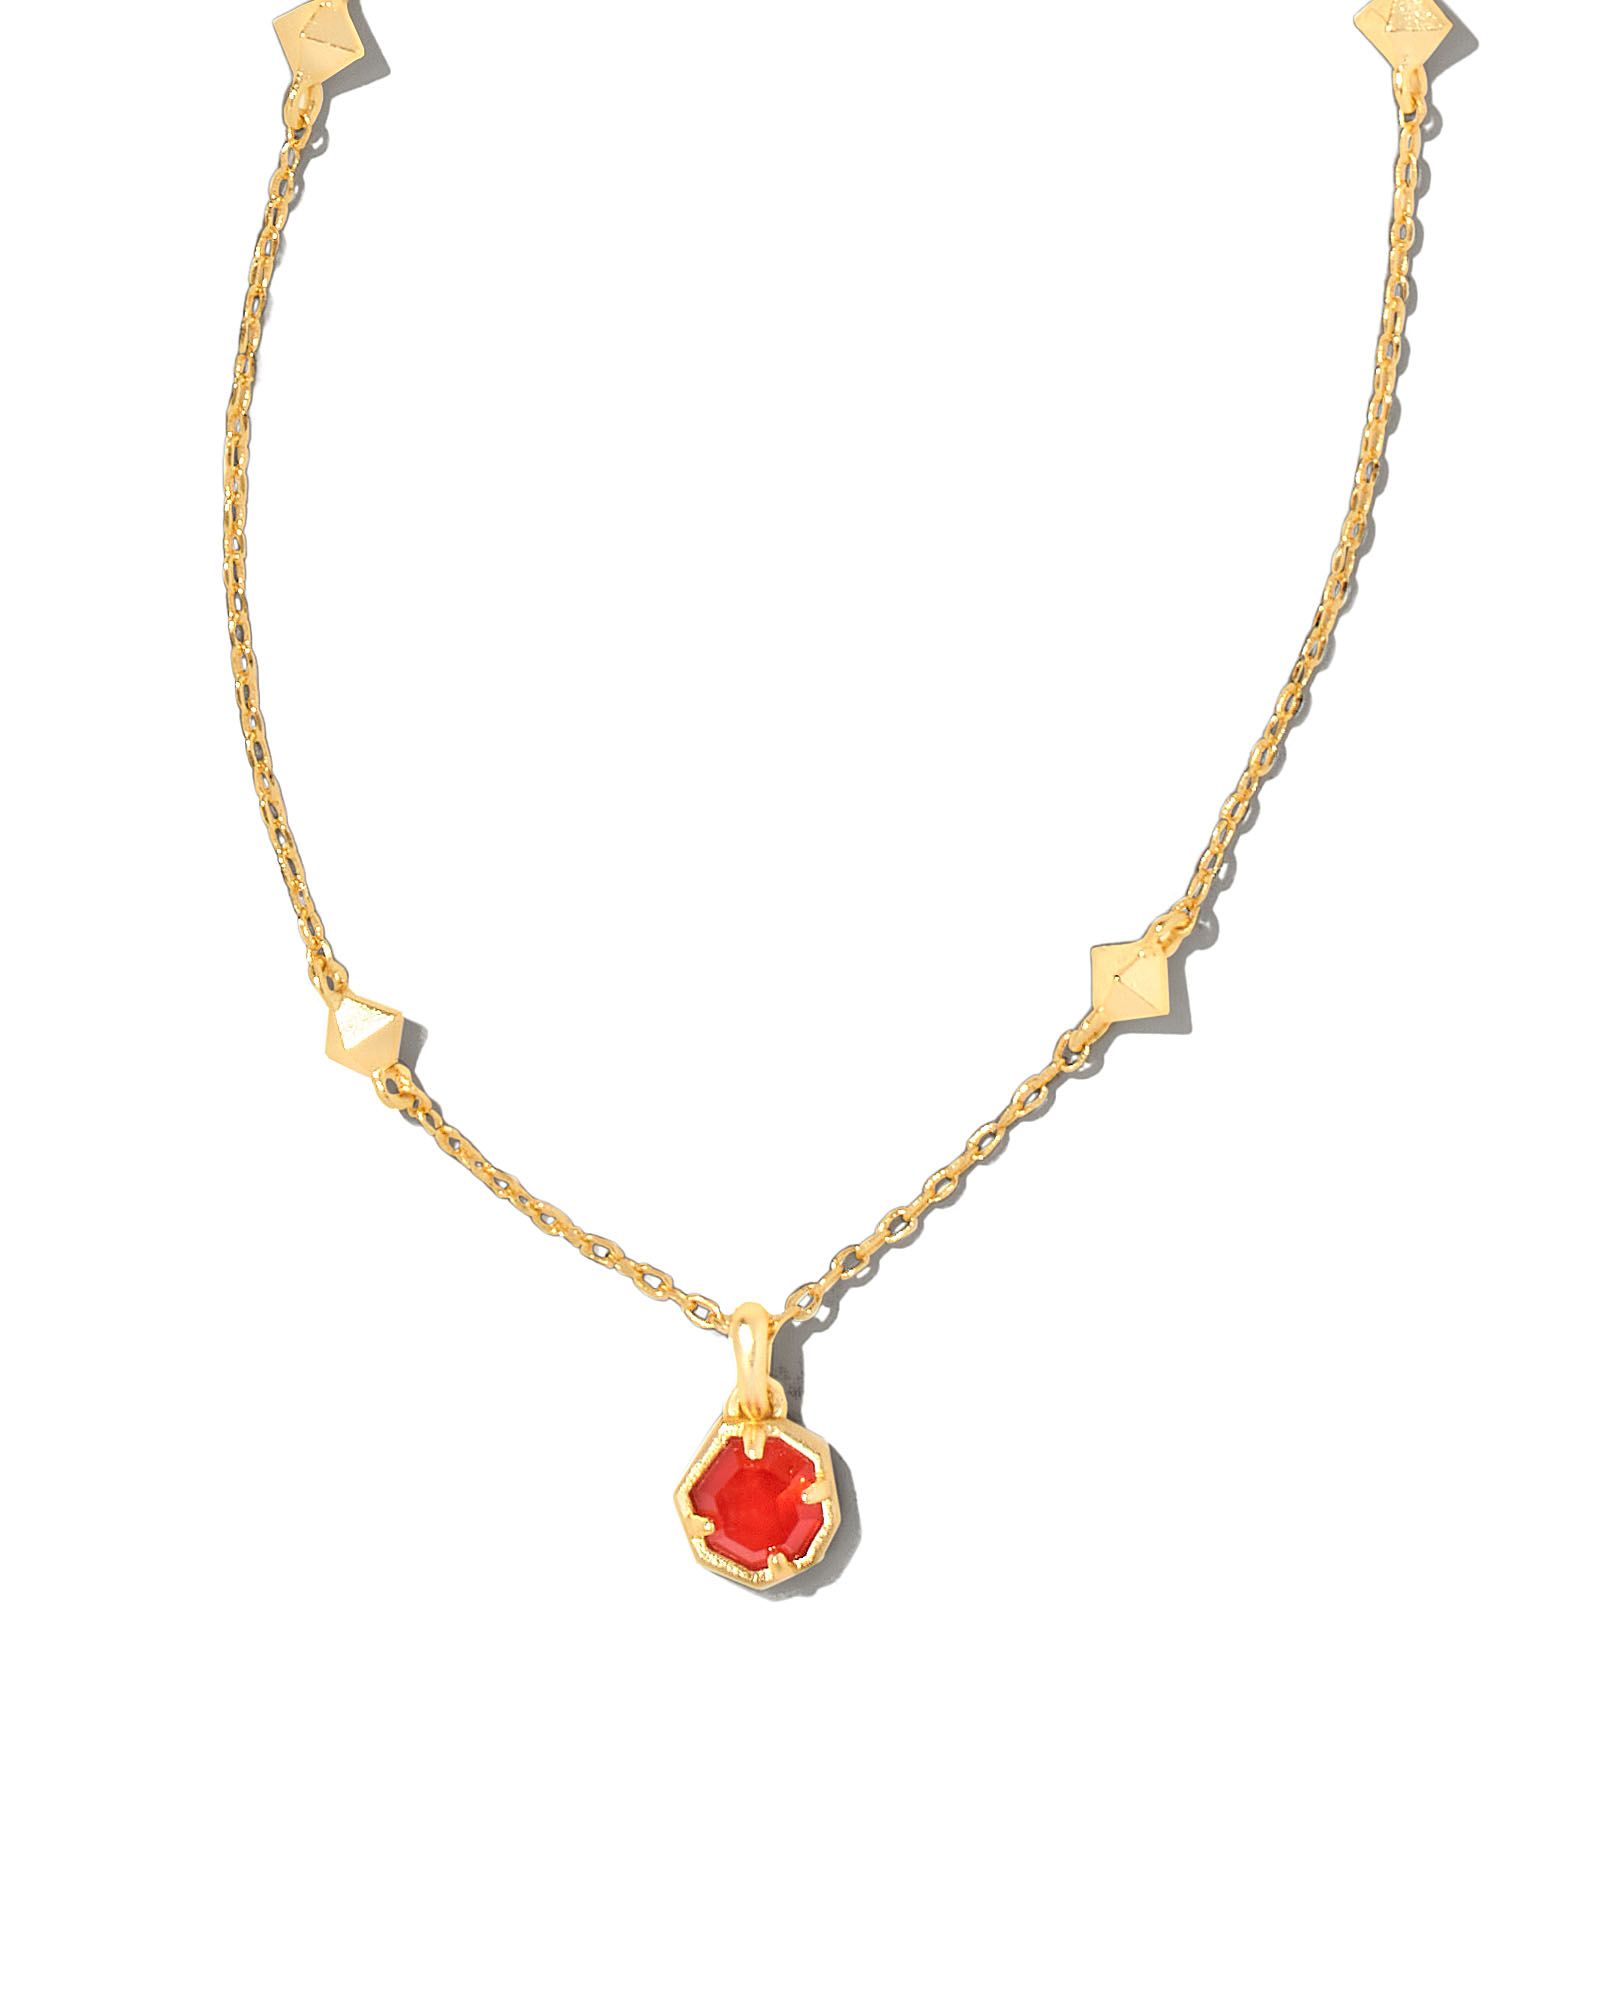 Nola Gold Pendant Necklace in Red Illusion | Kendra Scott